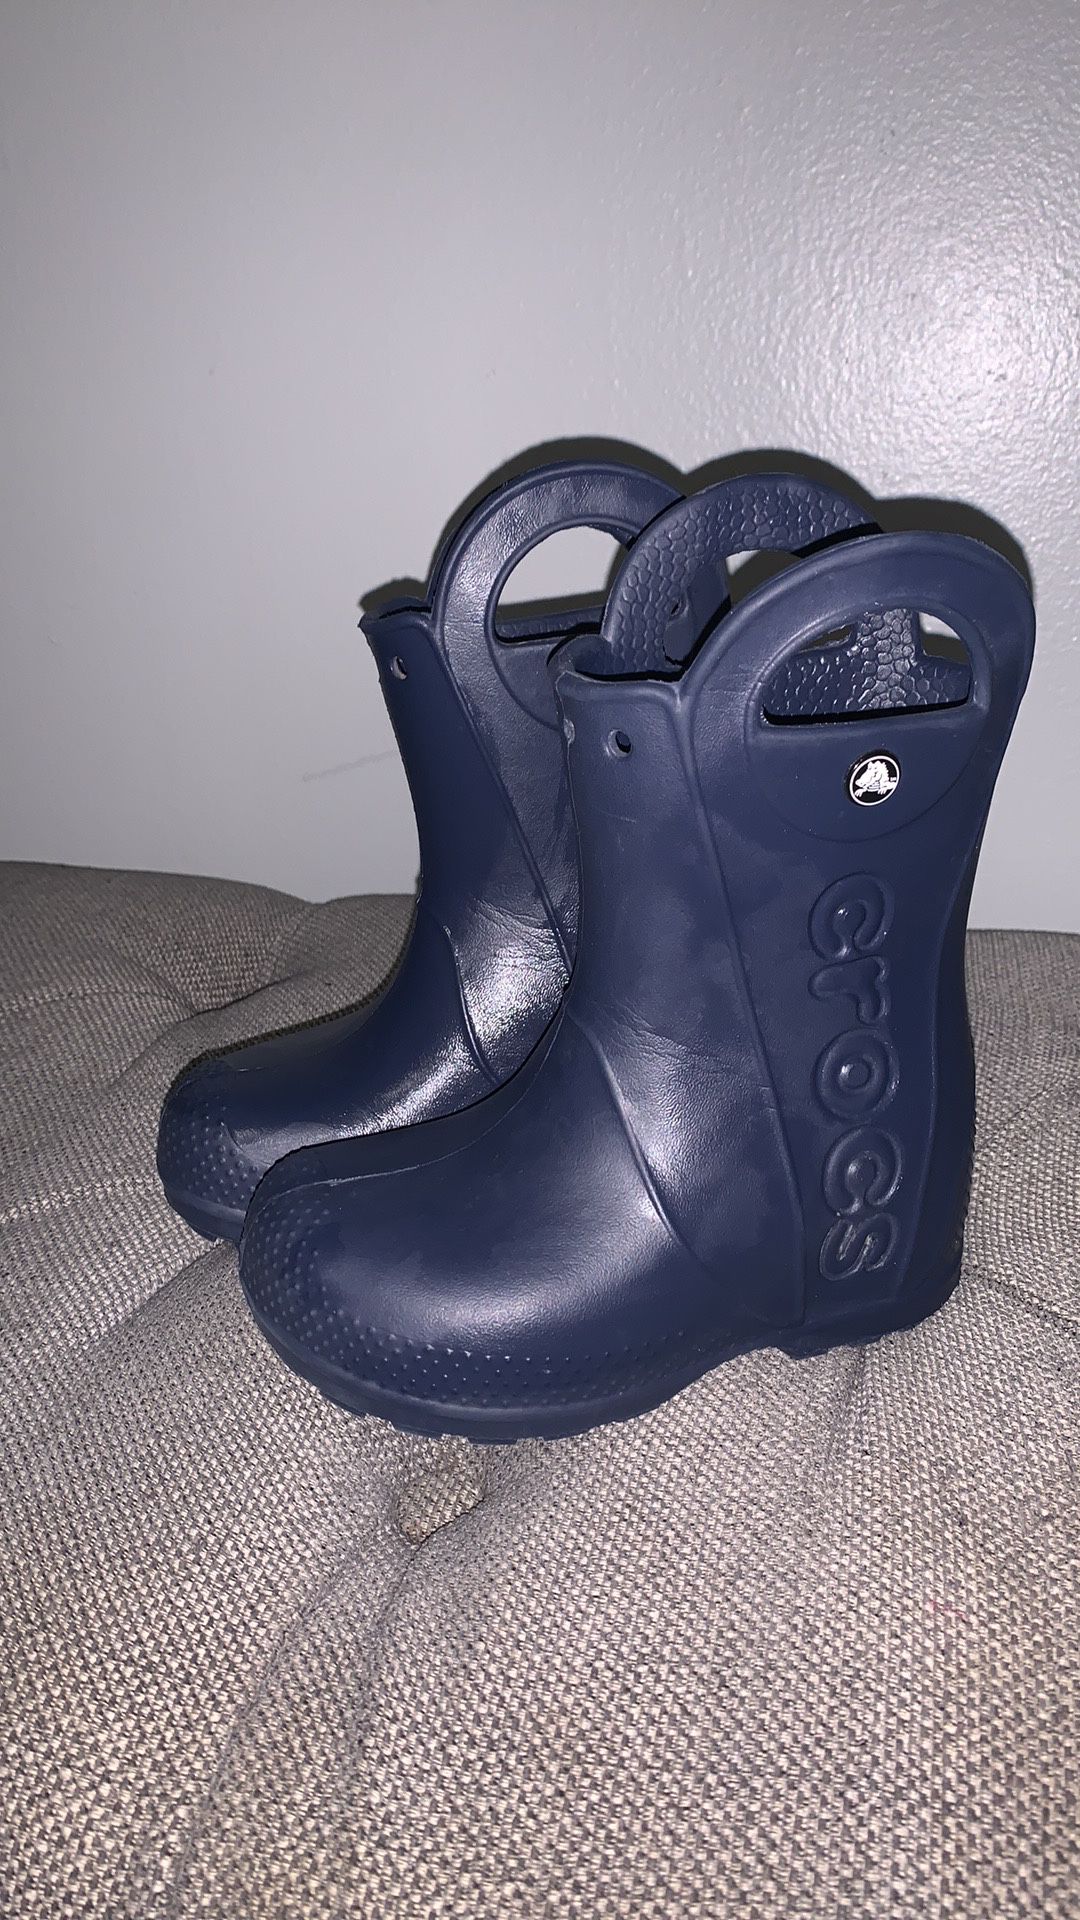 CROC rain boots